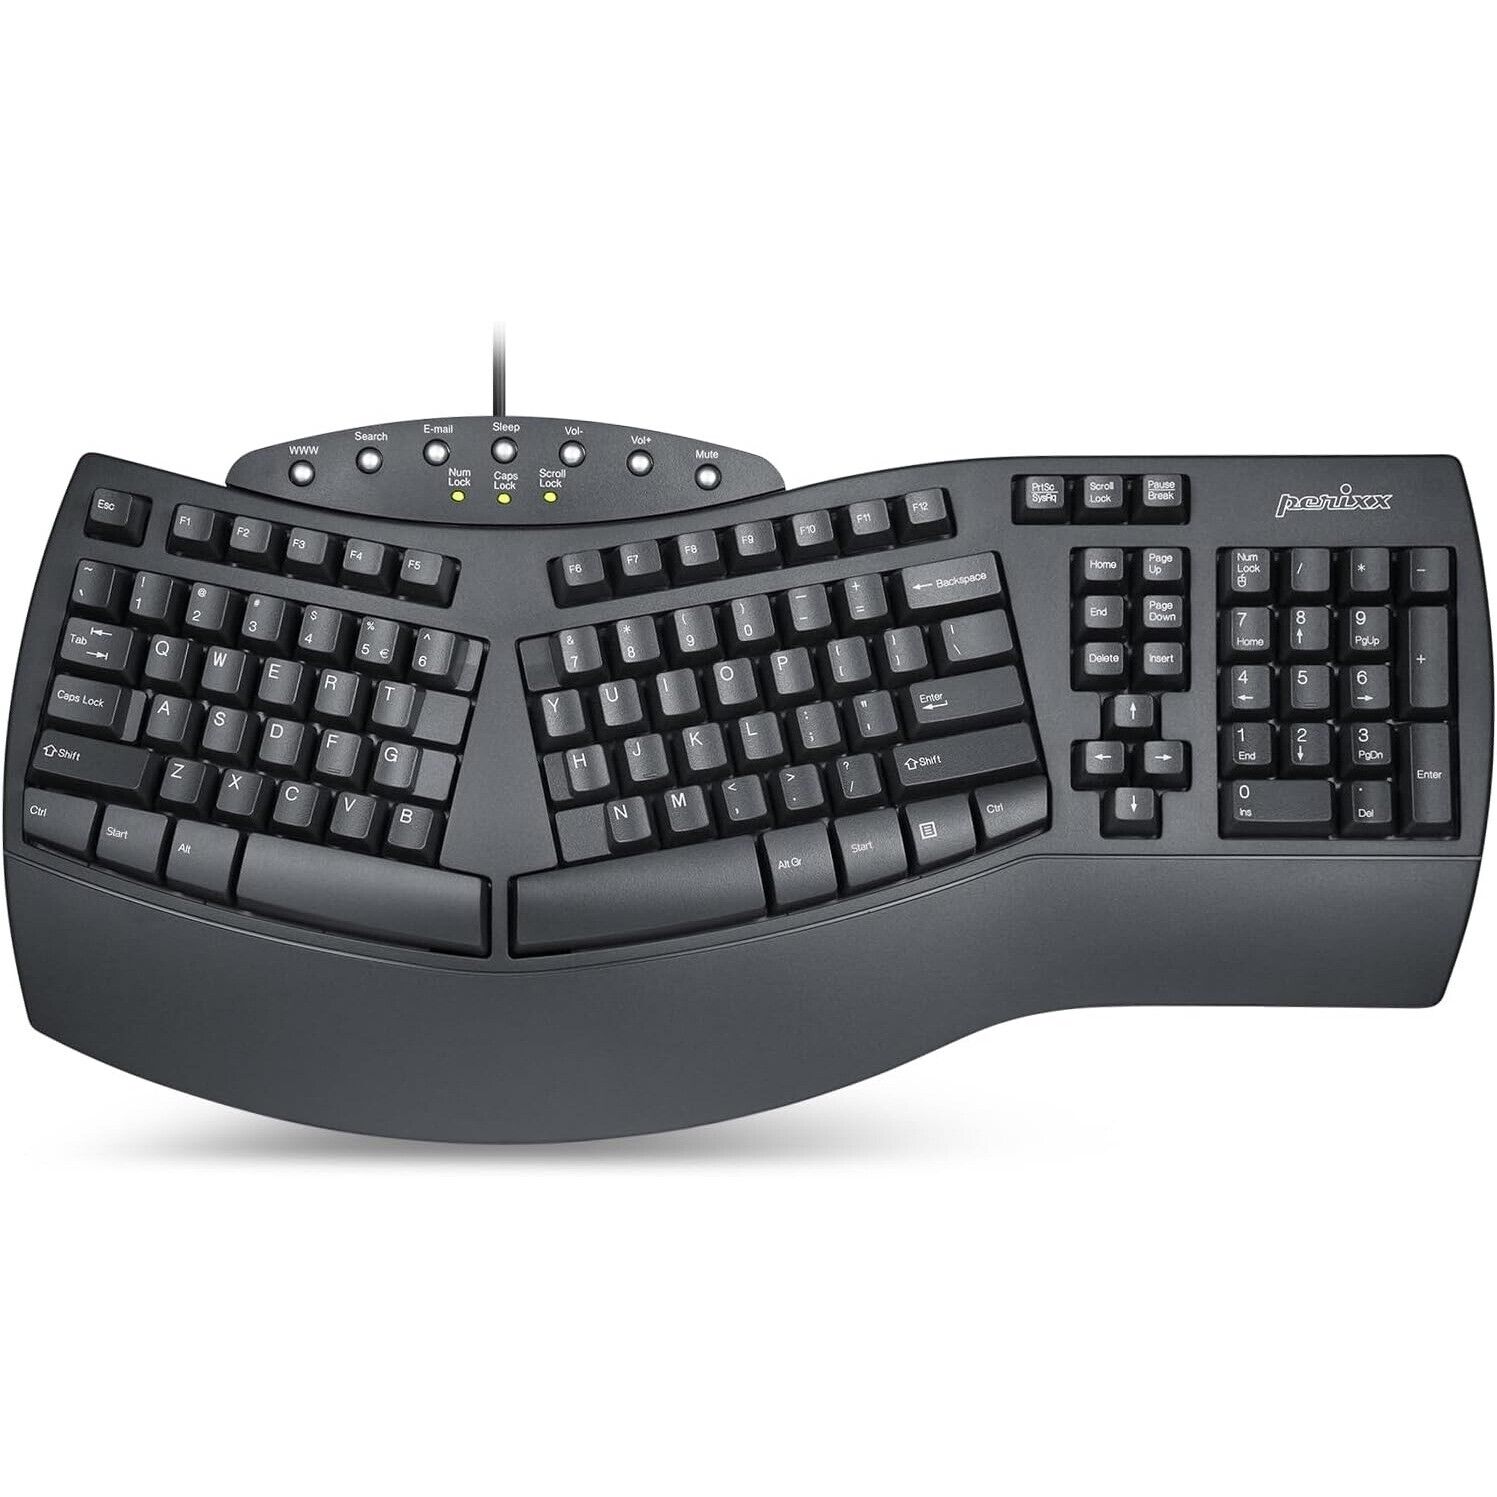 Perixx Periboard-512 Wired Ergonomic Split Keyboard Palm Rest Multimedia Keys